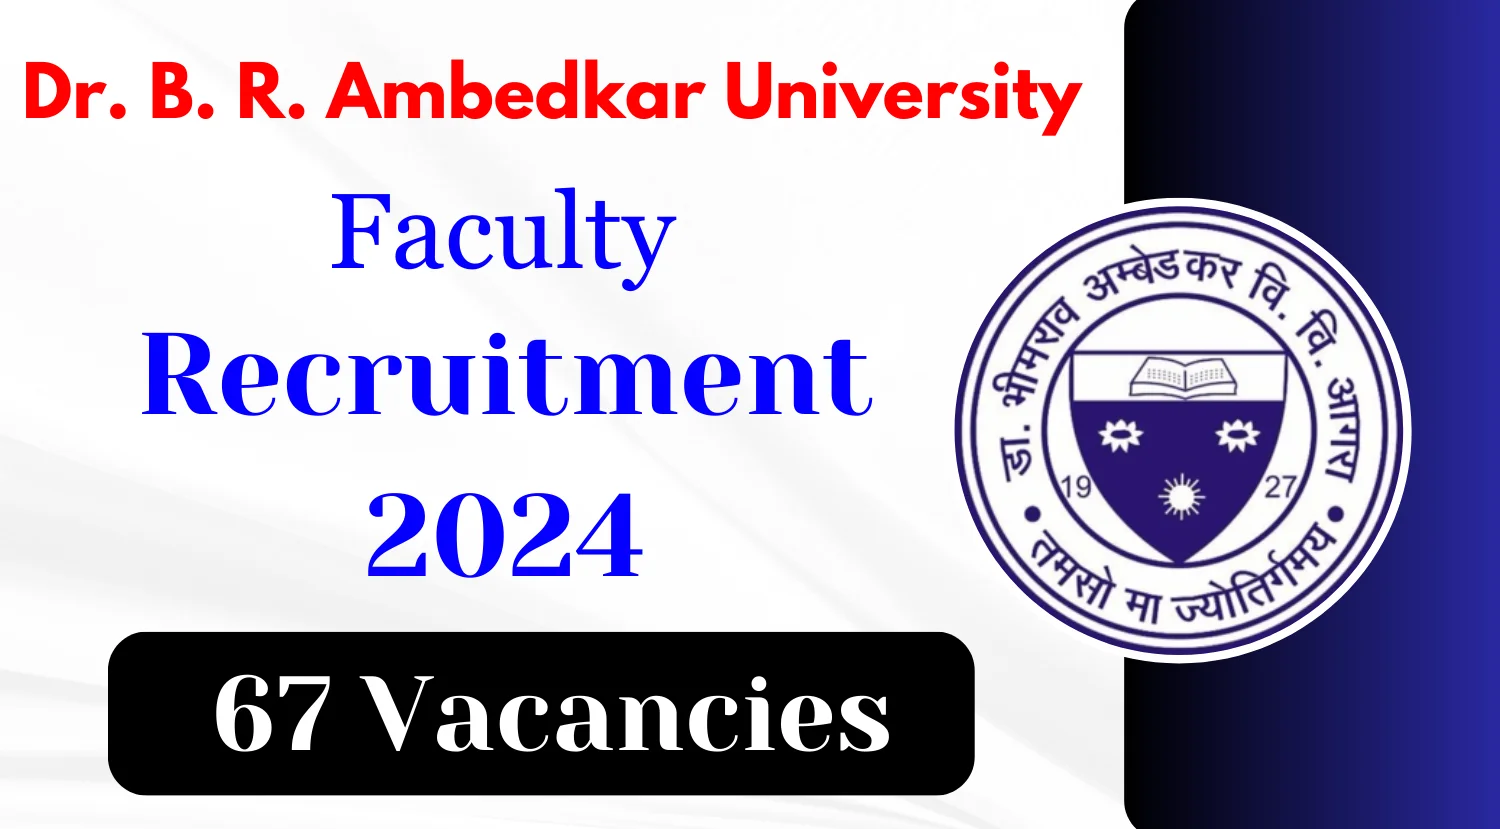 Dr B R Ambedkar University Faculty Recruitment 2024